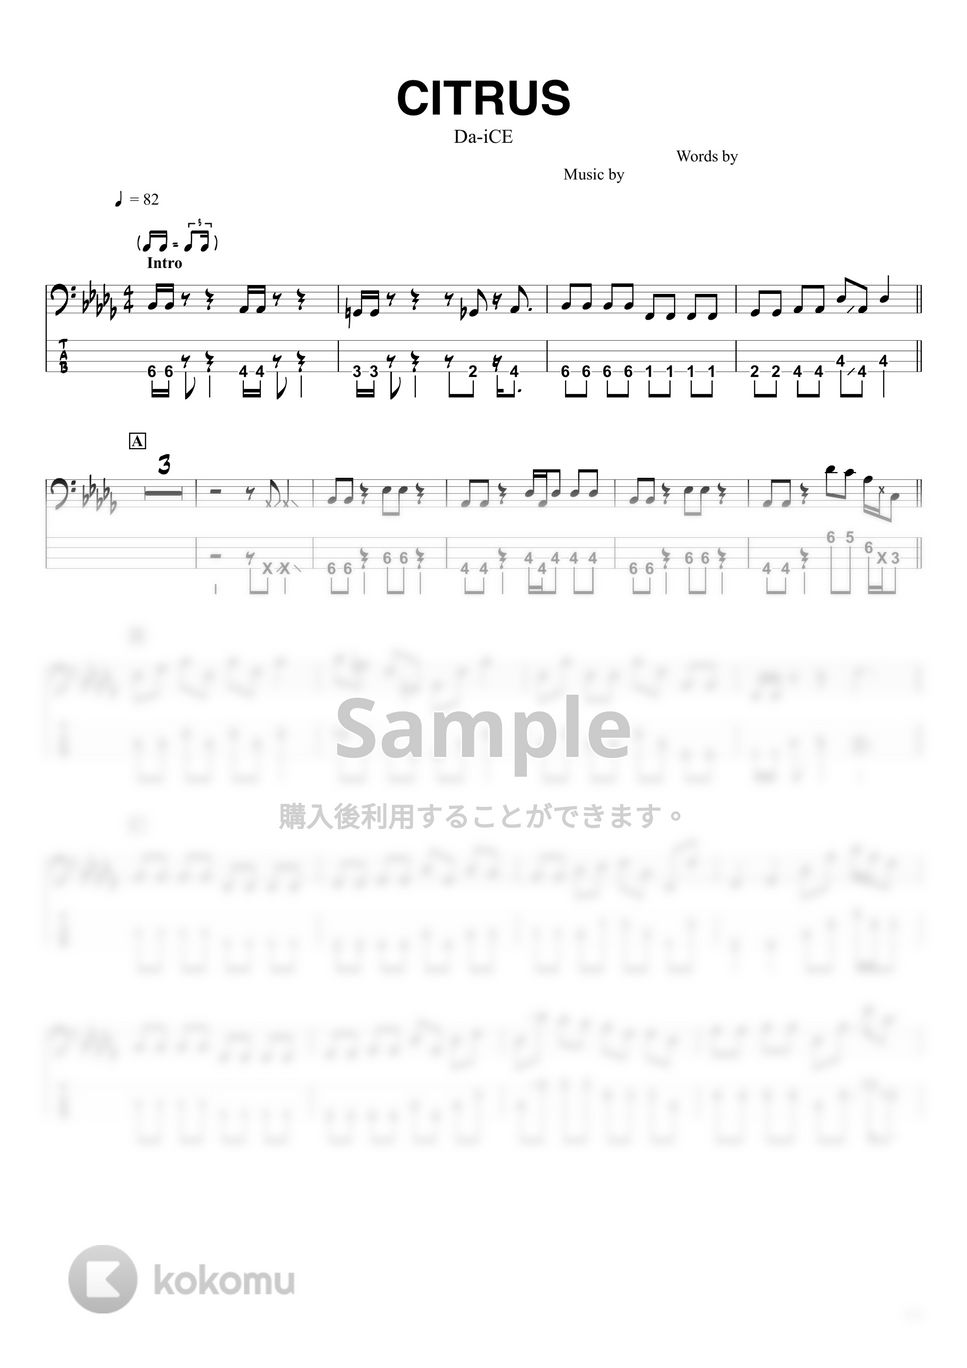 Da-iCE - CITRUS (ベースTAB譜☆4弦ベース対応) by swbass